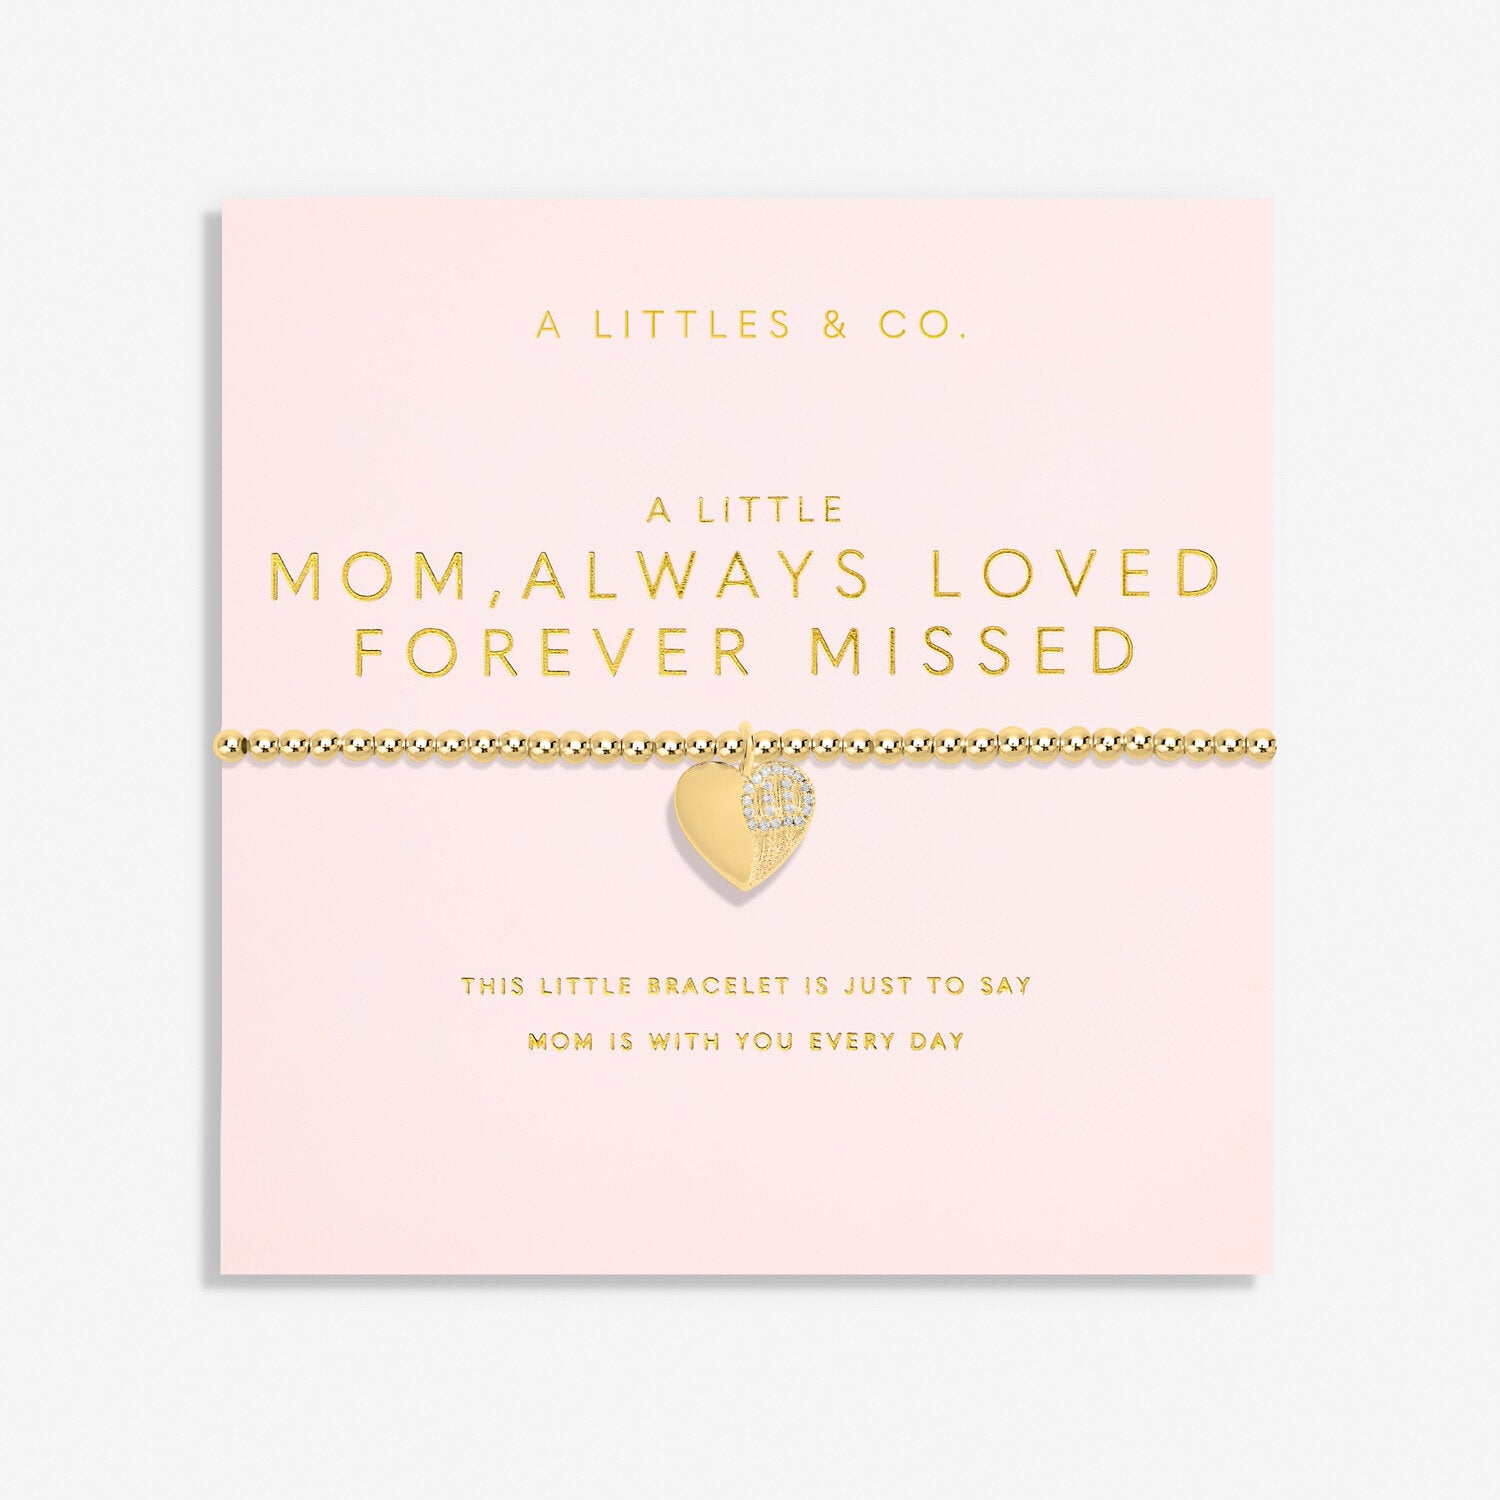 A Little Mom Always Loved Forever Missed